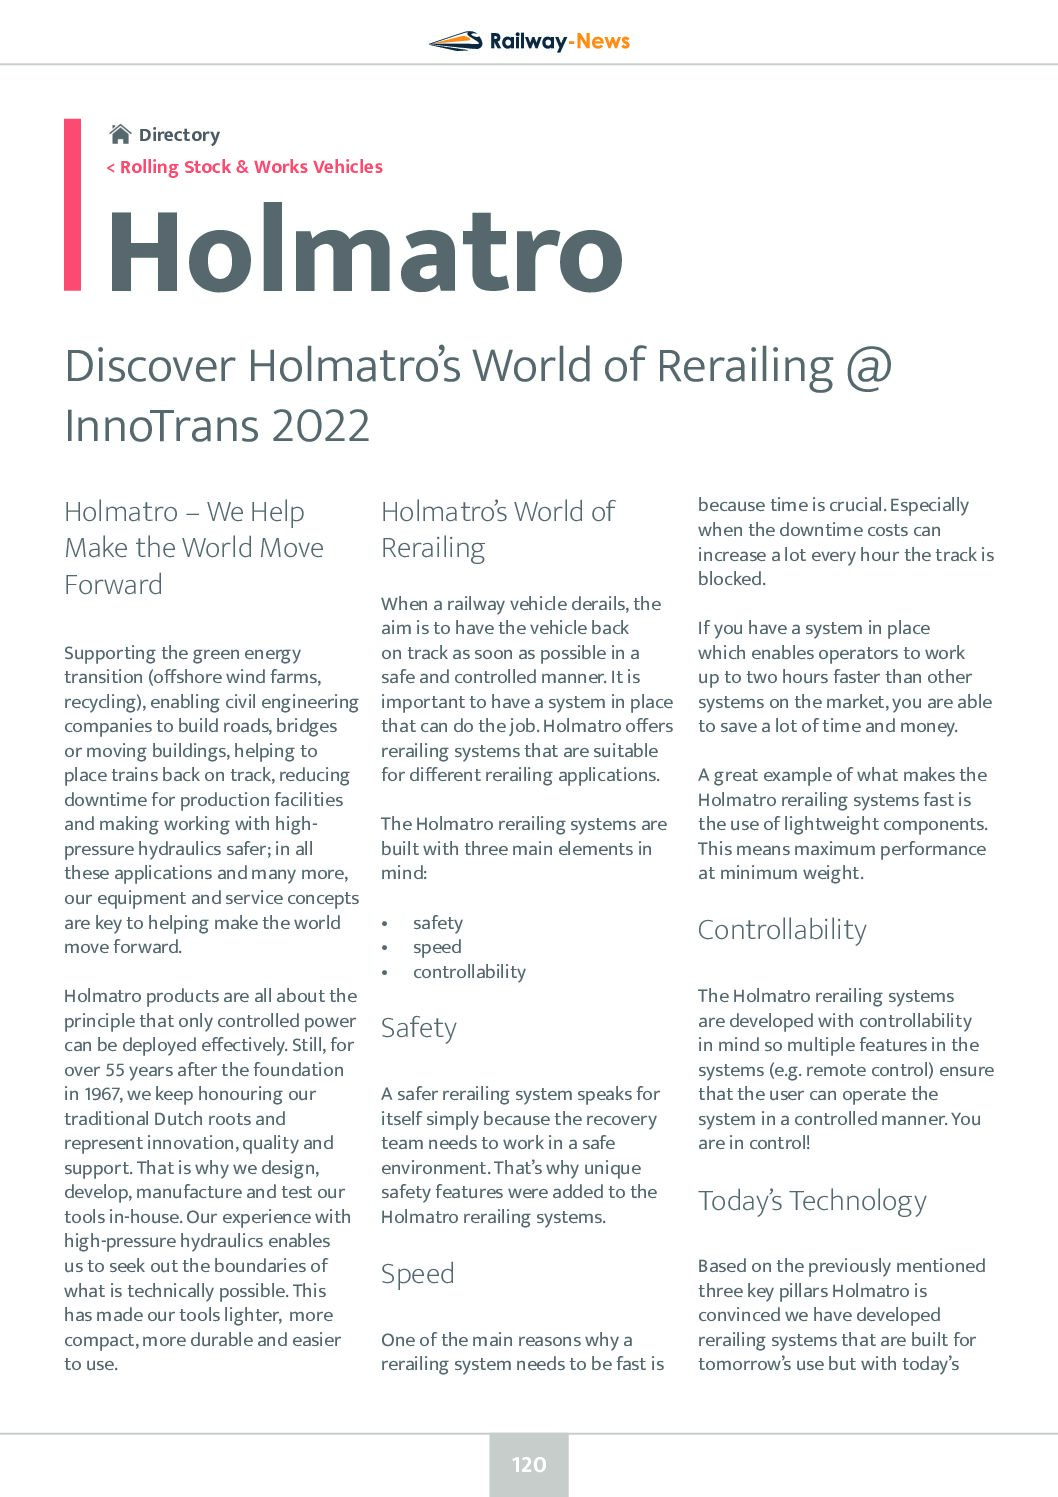 Discover Holmatro’s World of Rerailing @ InnoTrans 2022